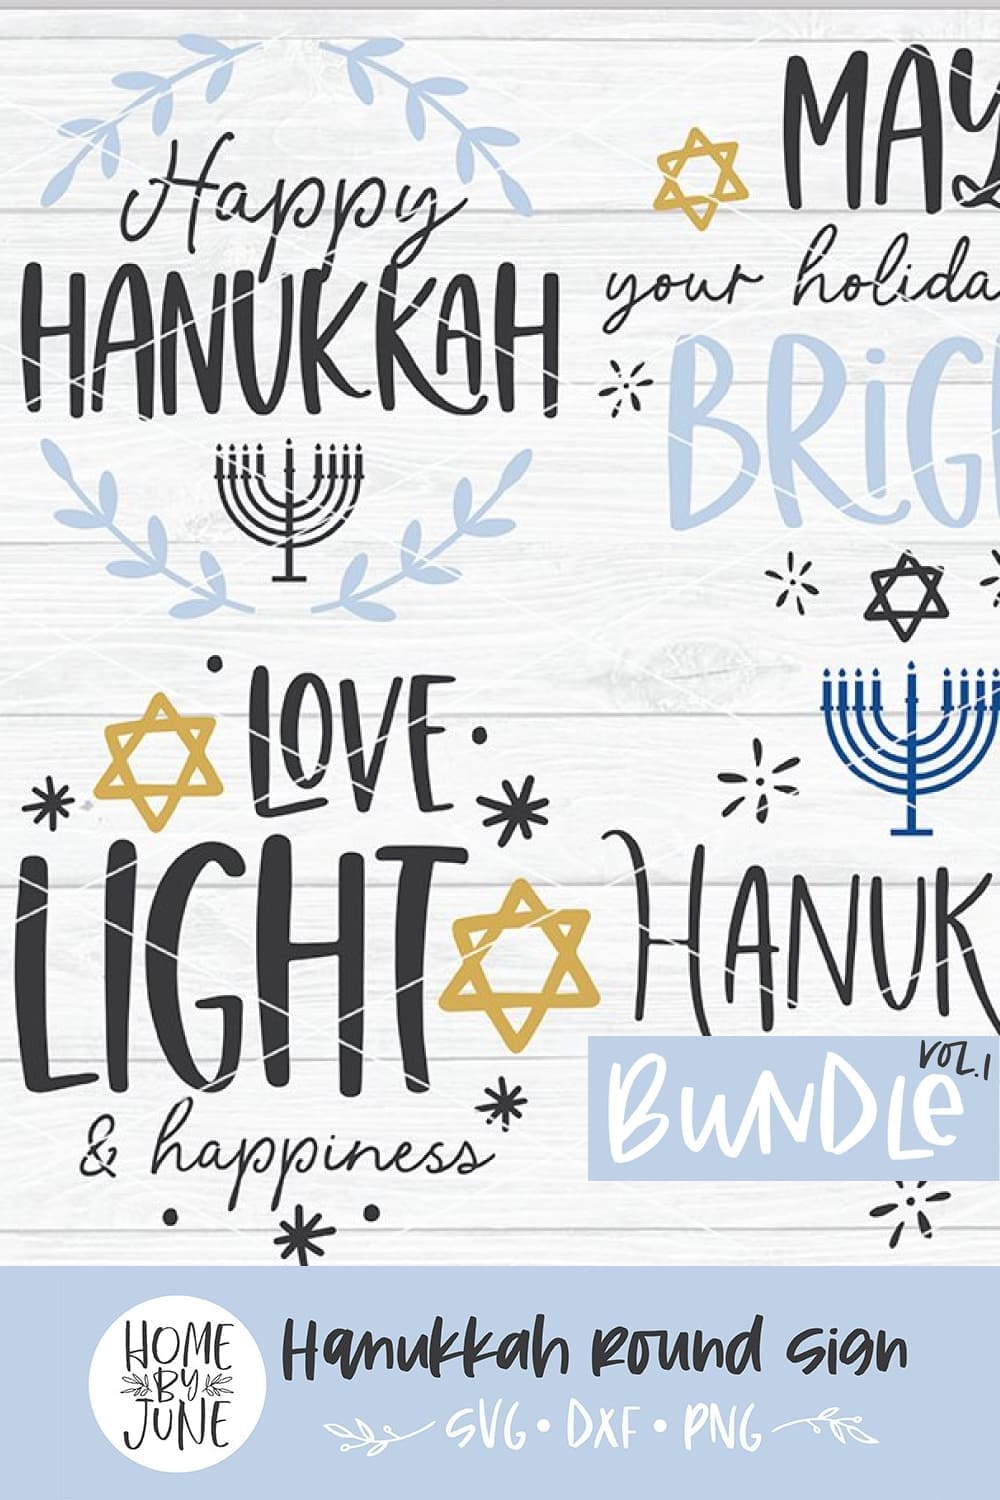 Hanukkah Round/Circle Sign Bundle Vol. 1 SVG DXF PNG - Pinterest.